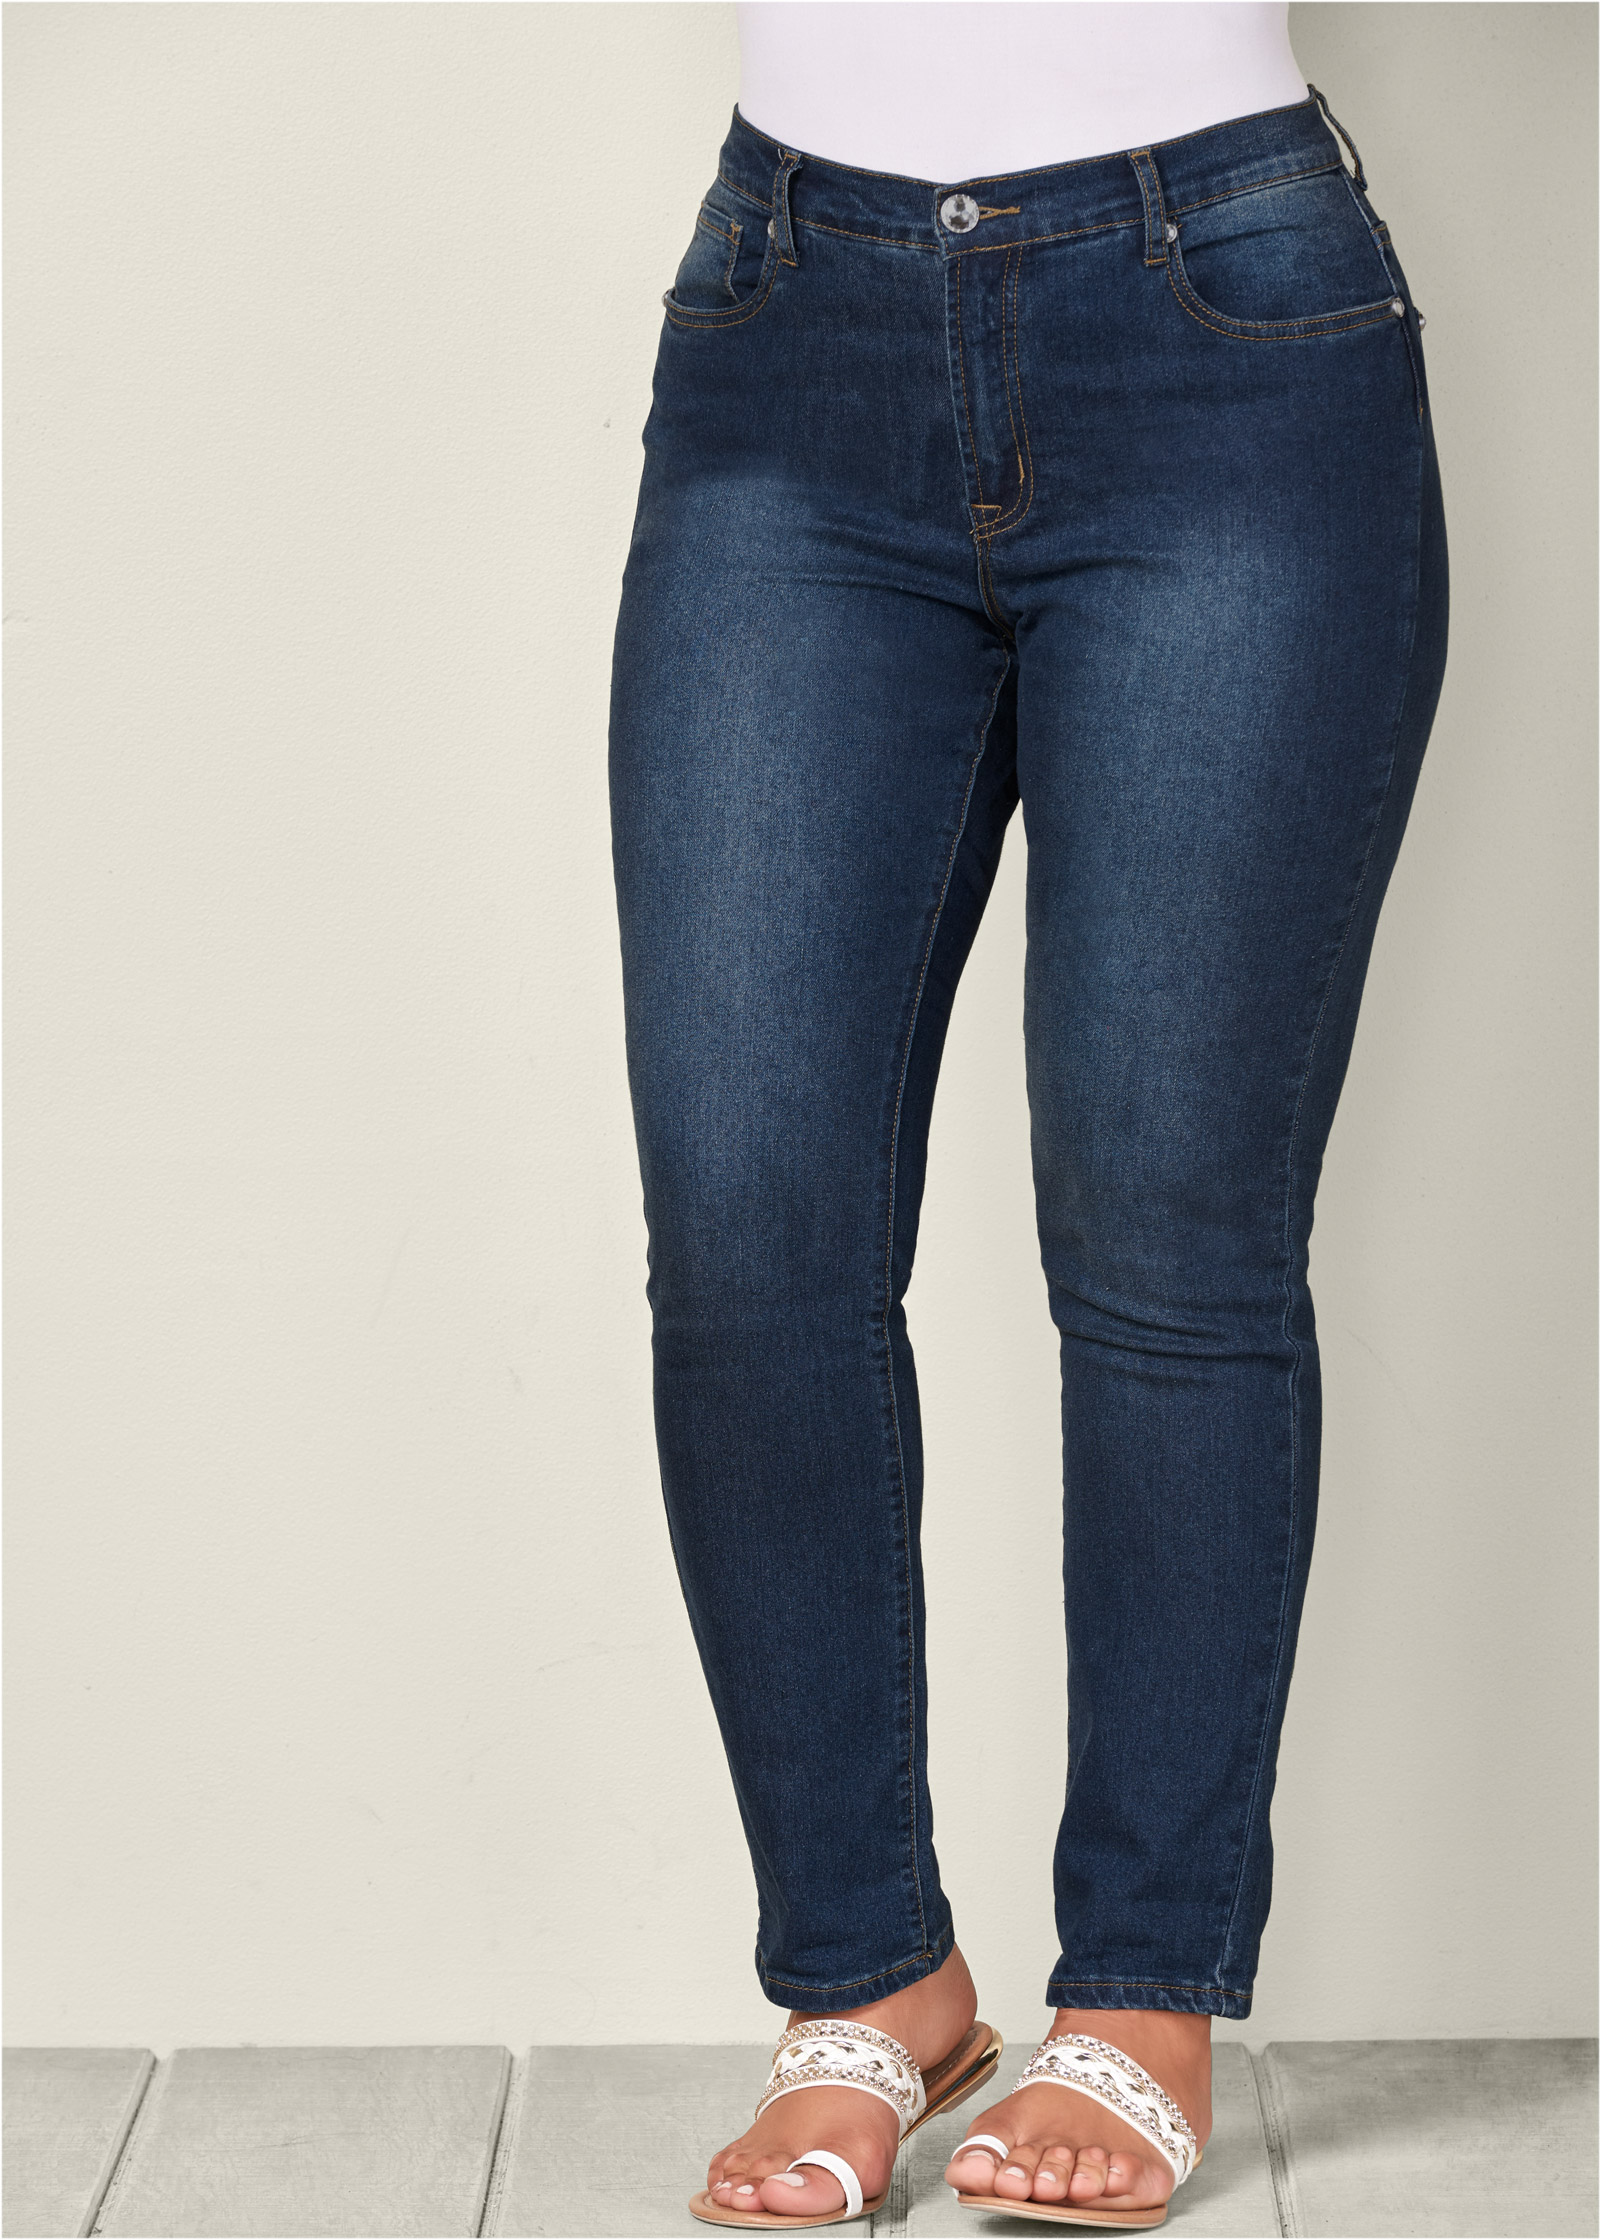 venus color skinny jeans